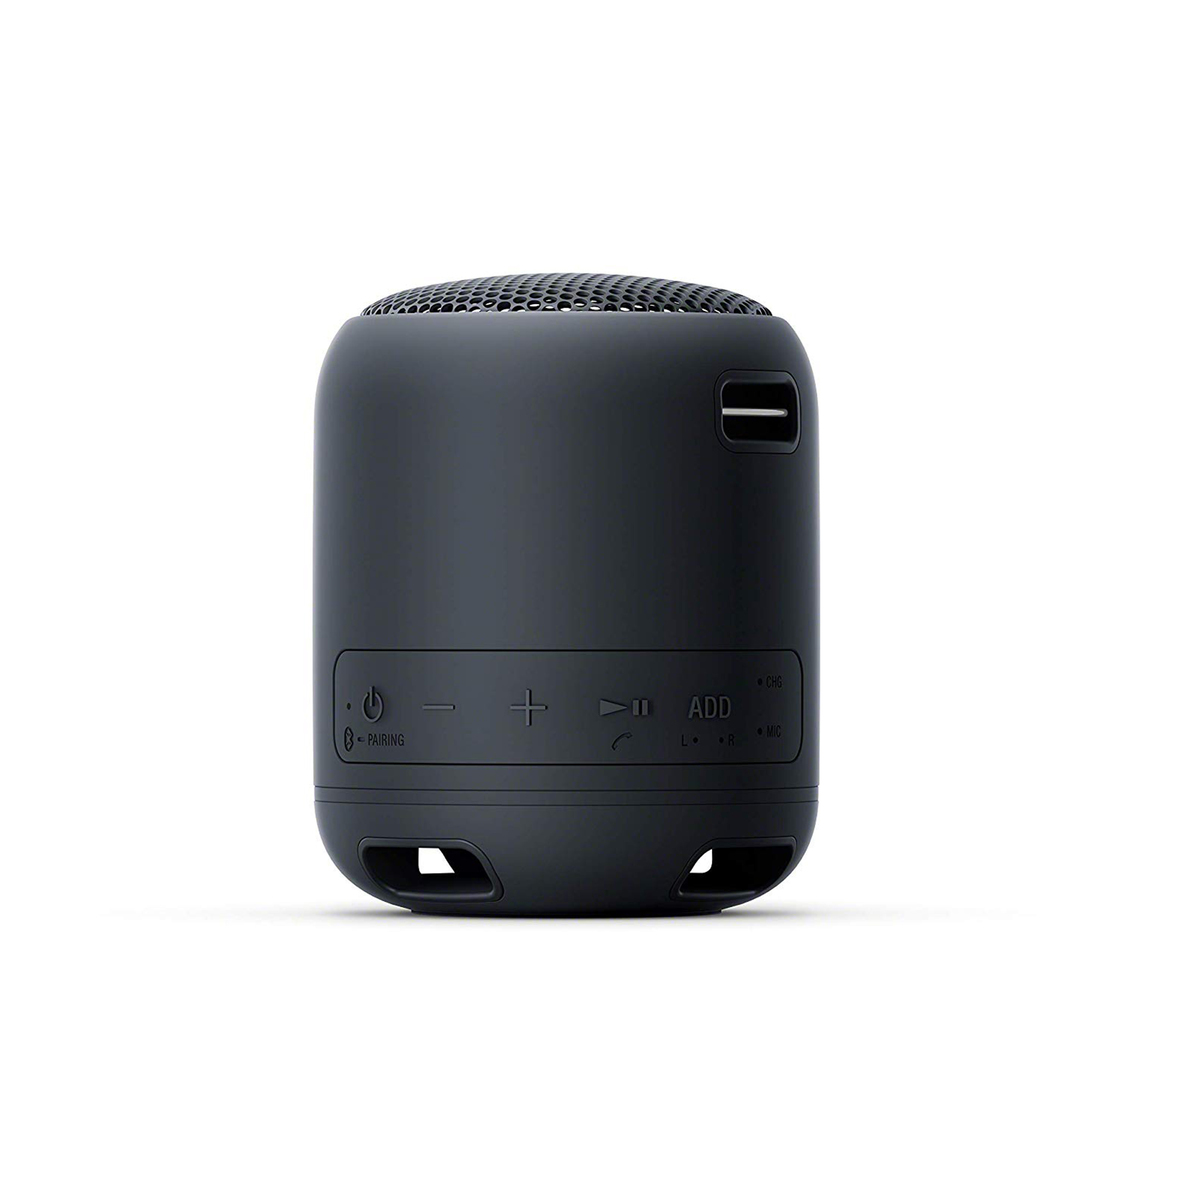 Sony Wireless Bluetooth Speaker SRS-XB12 Black